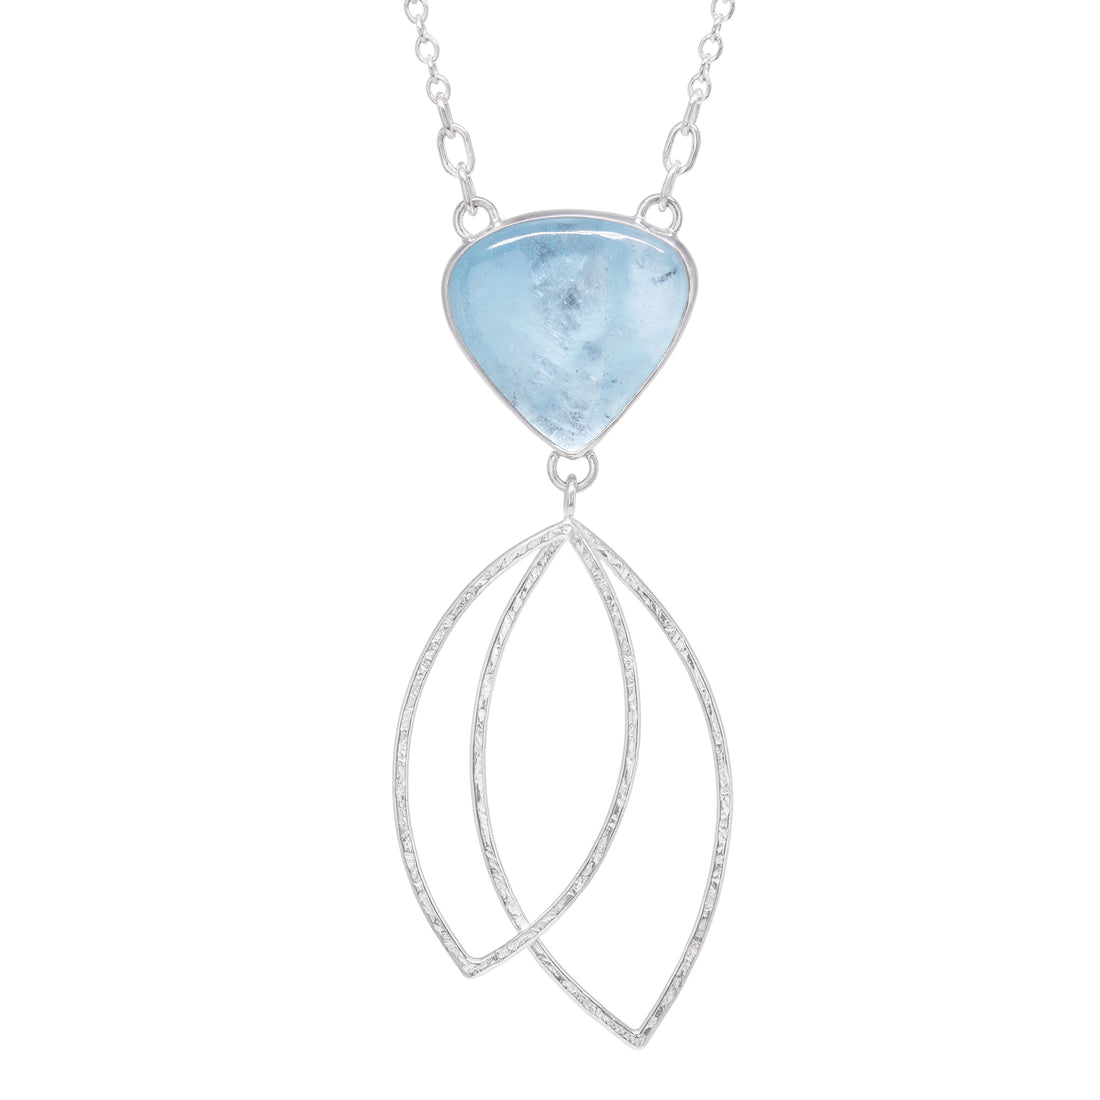 Double Leaf Pendant Necklace - Aquamarine Teardrop - Bright Sterling